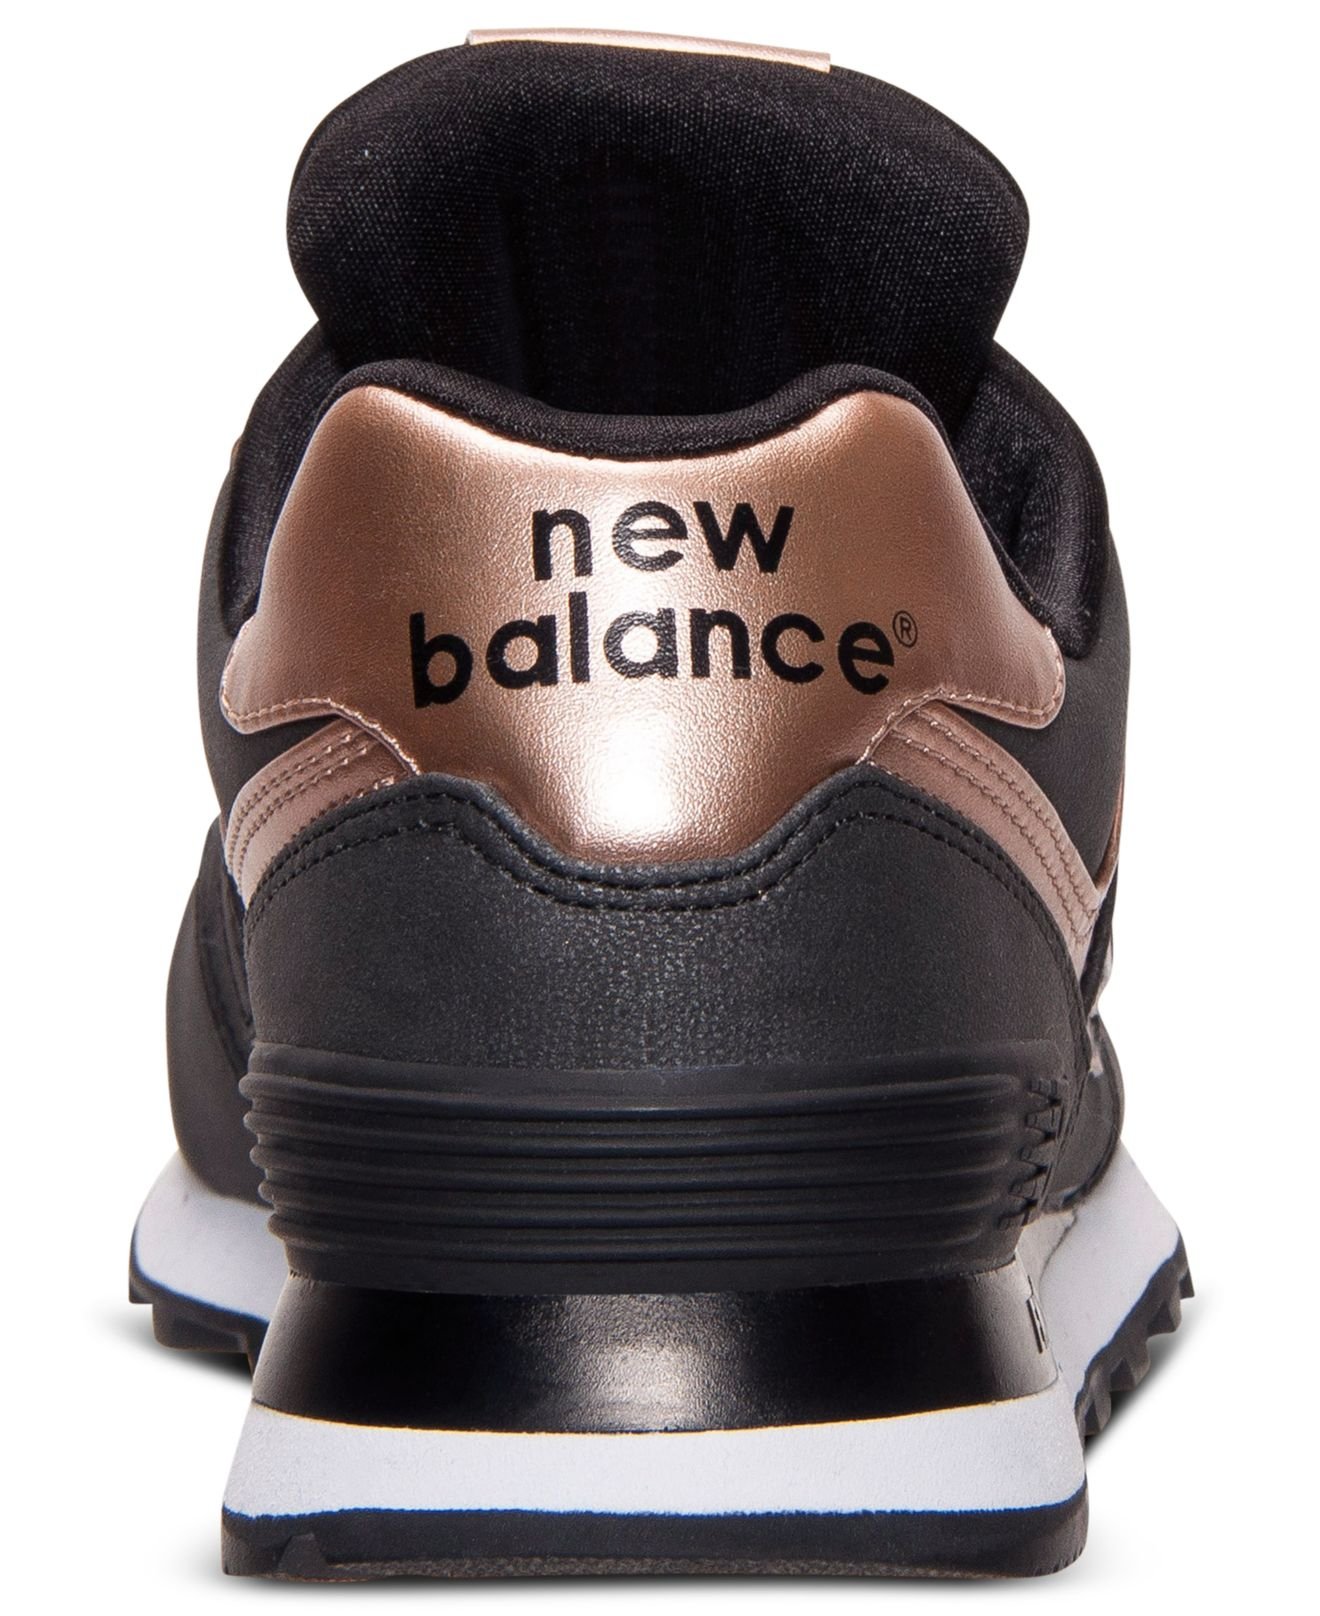 new balance 574 noir et rose gold